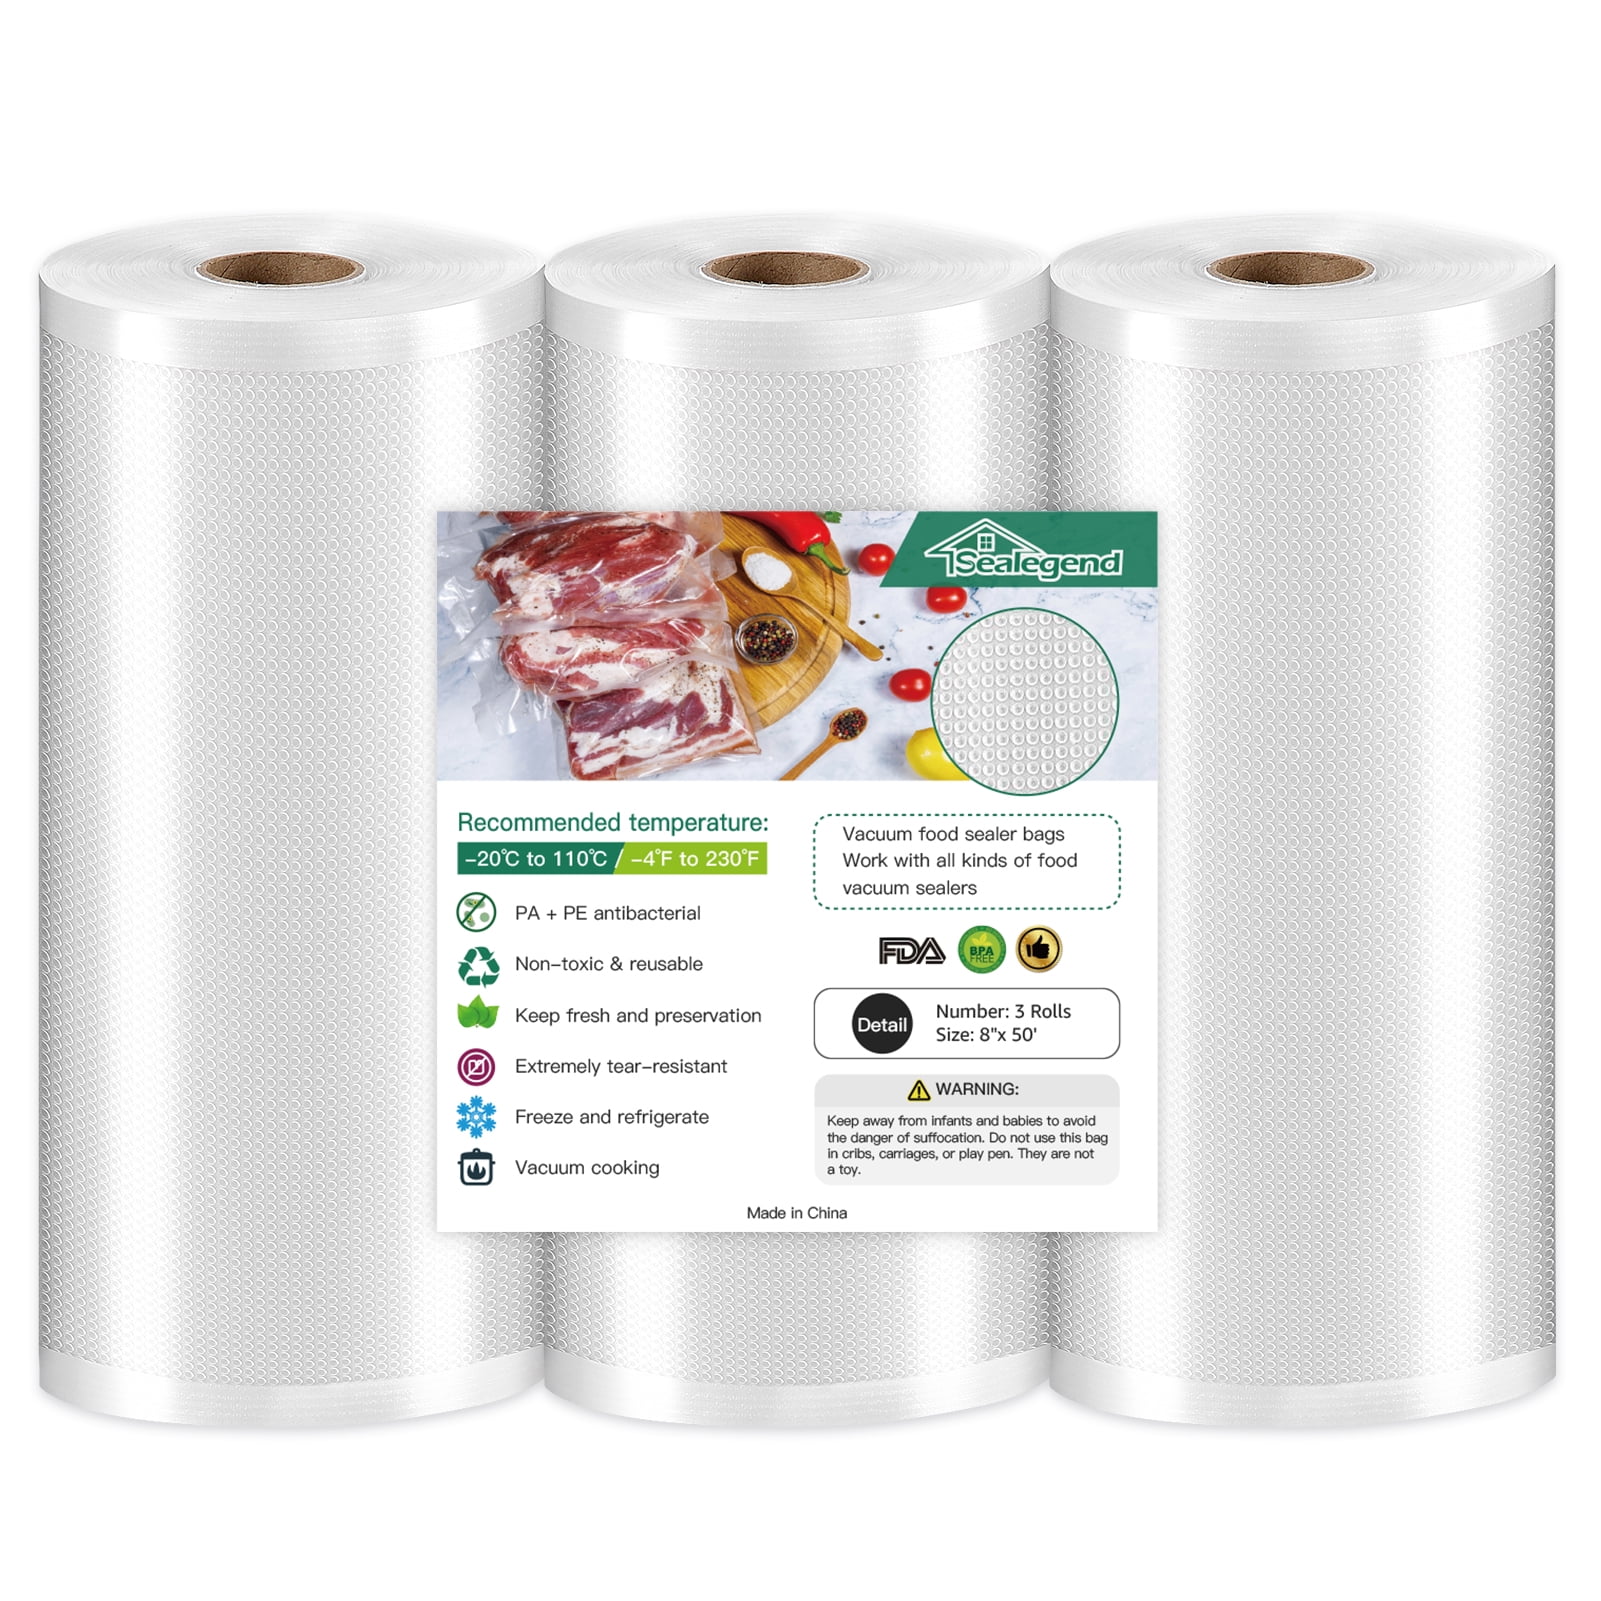 FoodVacBags™ 8 X 50' Vacuum Sealer Roll - Food Saver Compatible